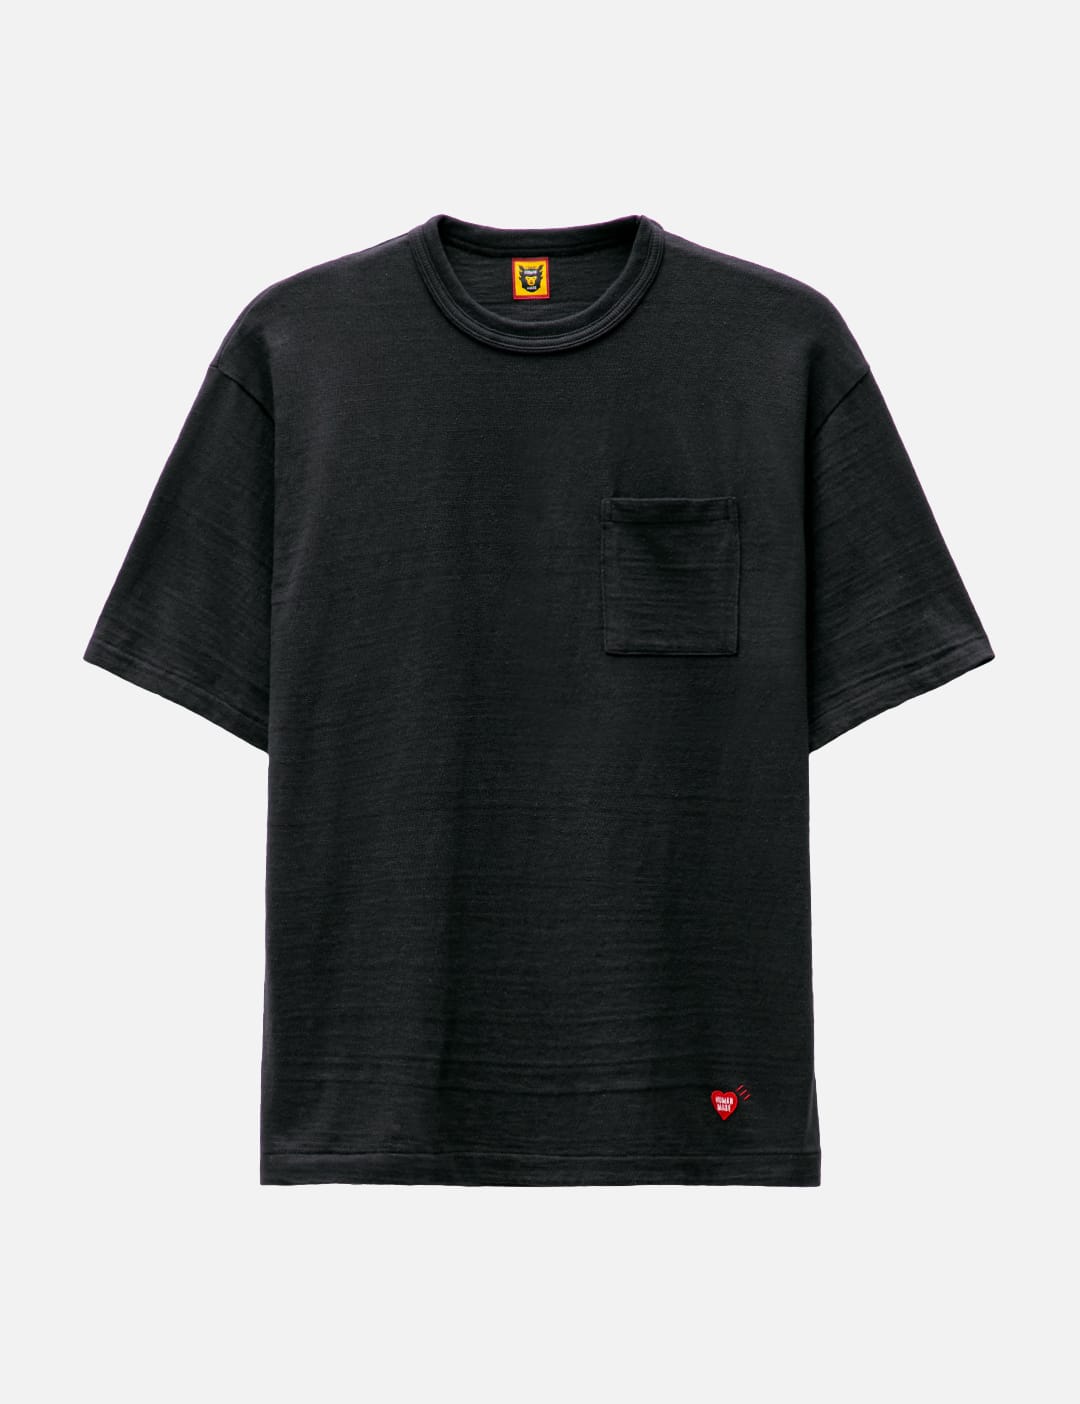 Human Made Pocket T-shirts #1 In Black | ModeSens